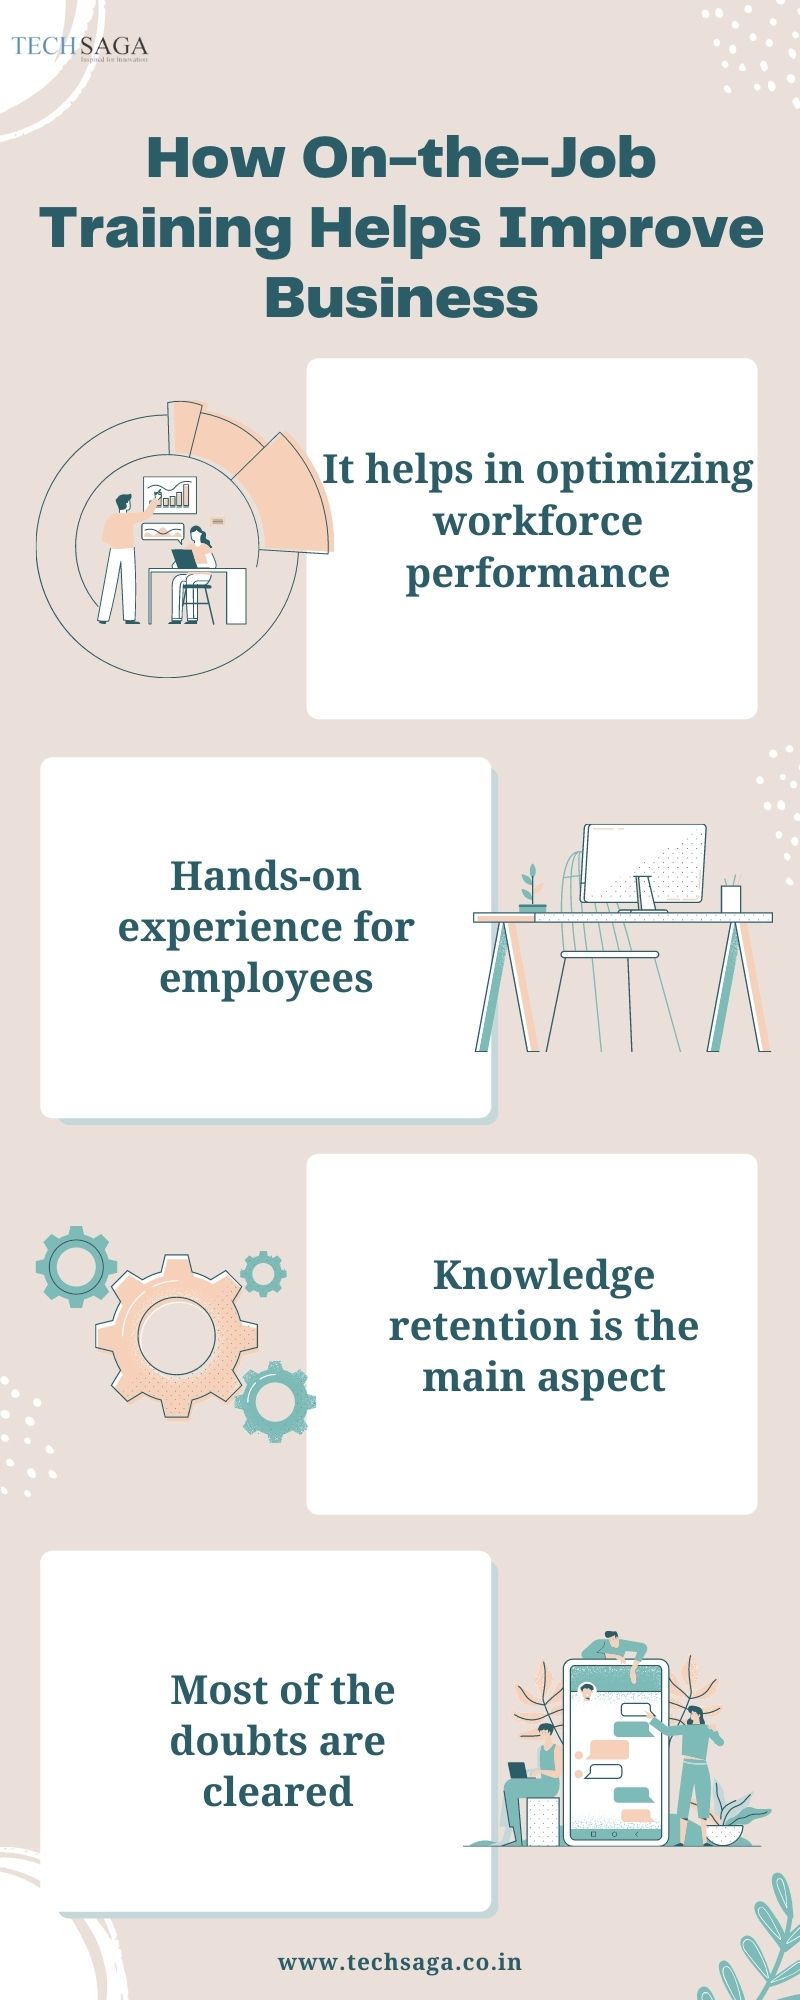 How On-the-Job Training Helps Improve Business.jpg  by techsaga